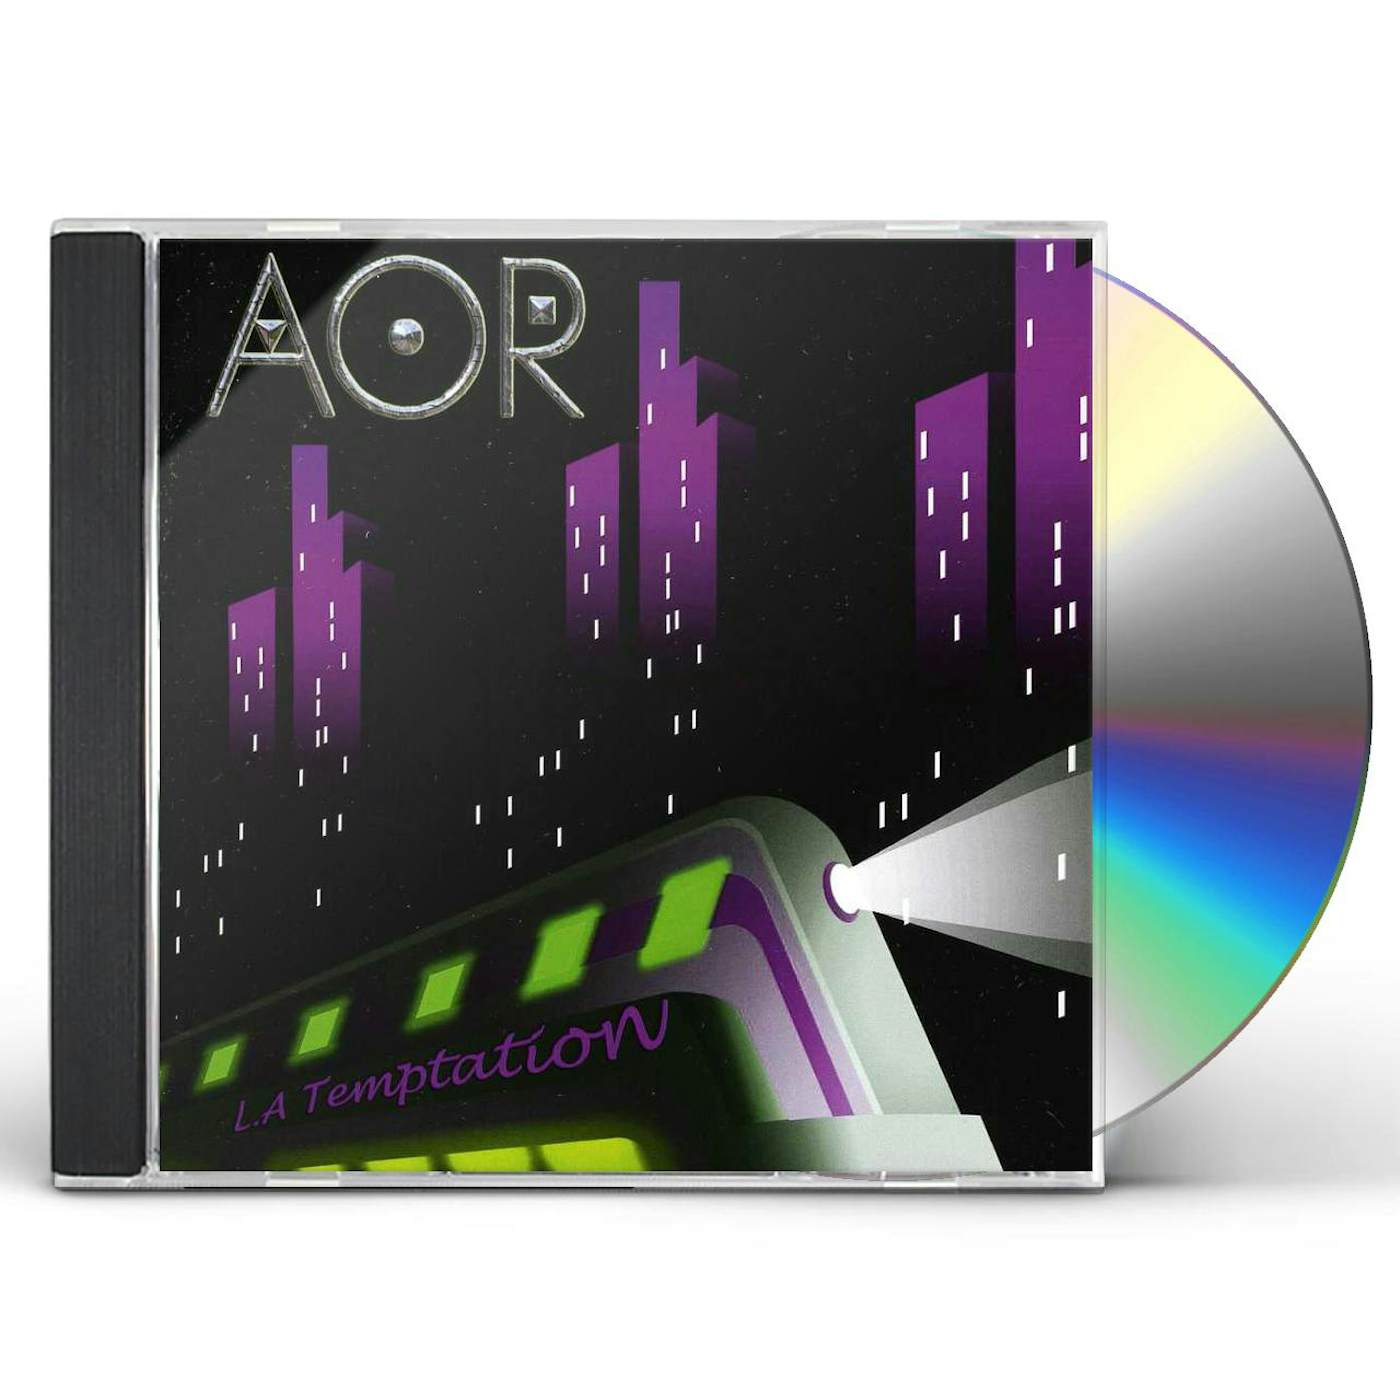 AOR LA TEMPTATION CD